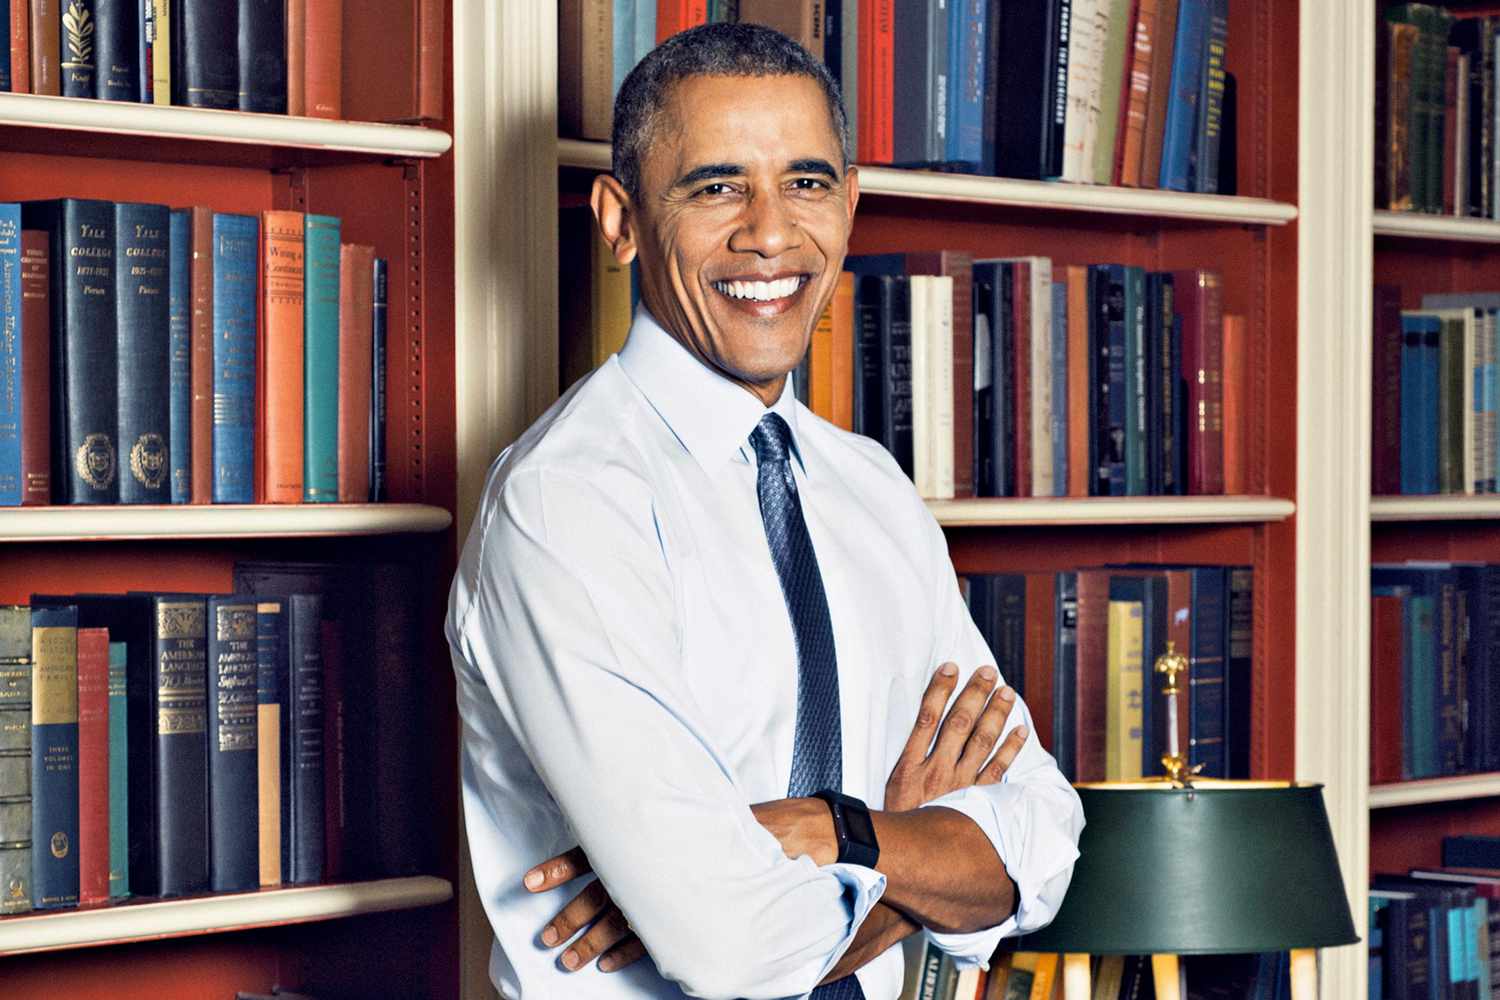 Barack Obama On Writing His Memoir A Promised Land Ew Com